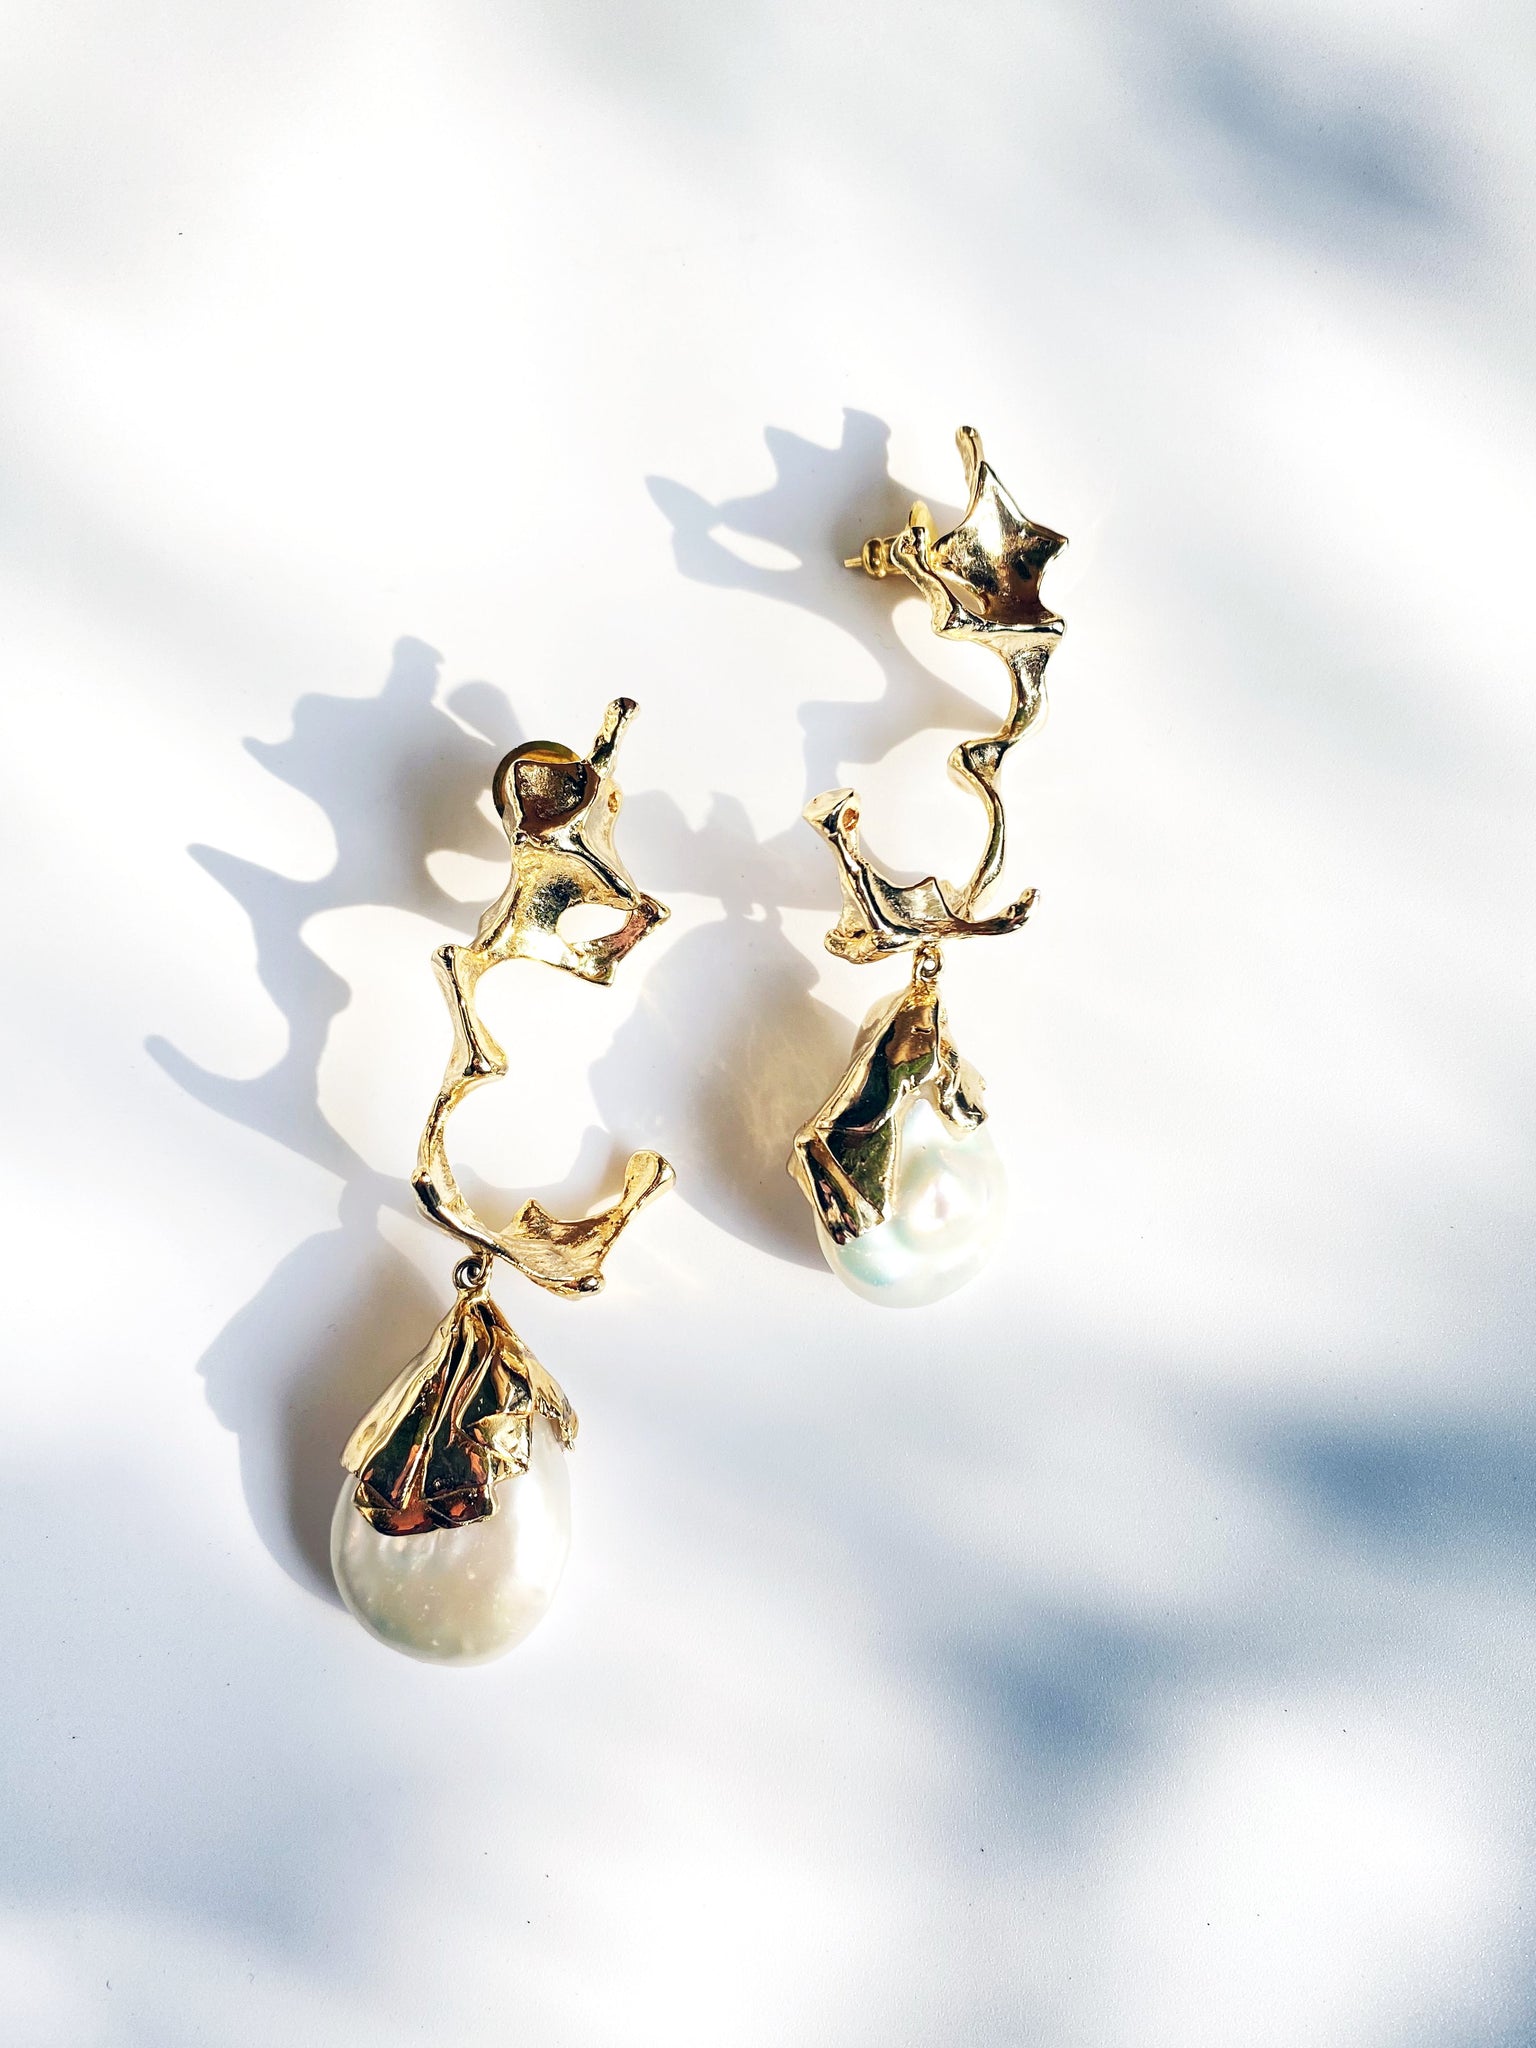 Limited Edition Studio Metallurgy Sea horse pearl earrings 